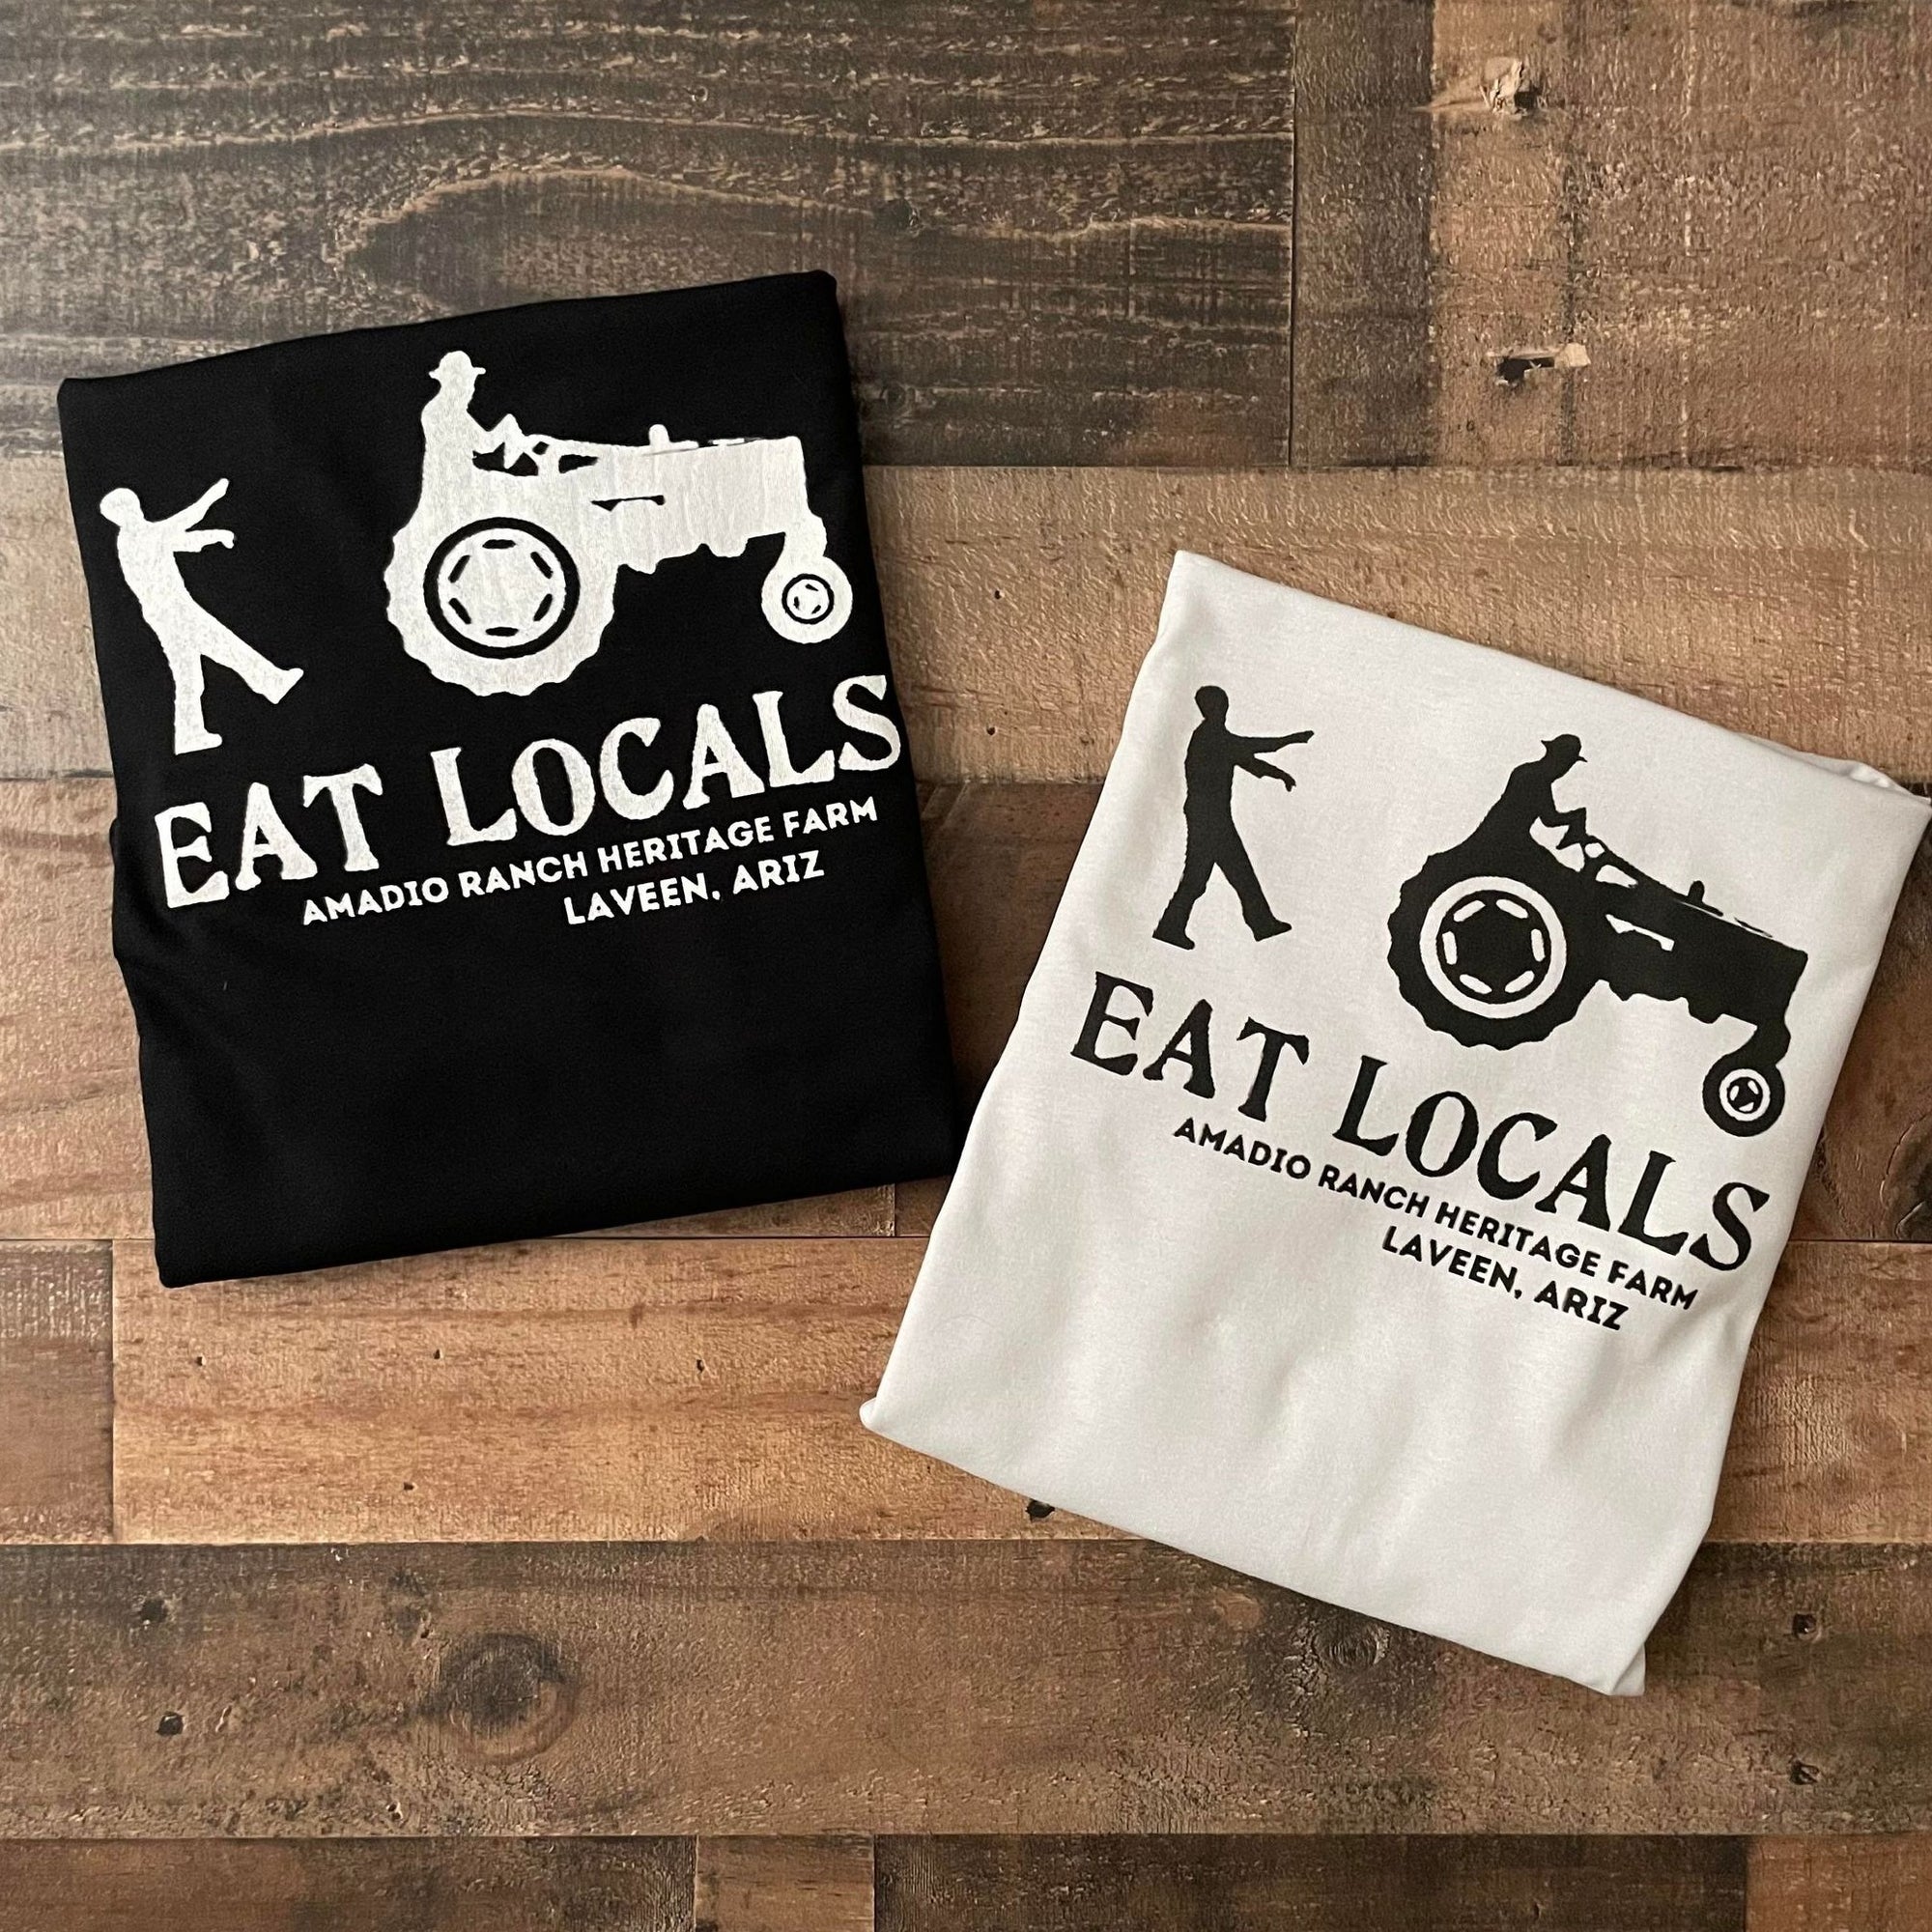 Zombie "Eat Locals" shirt